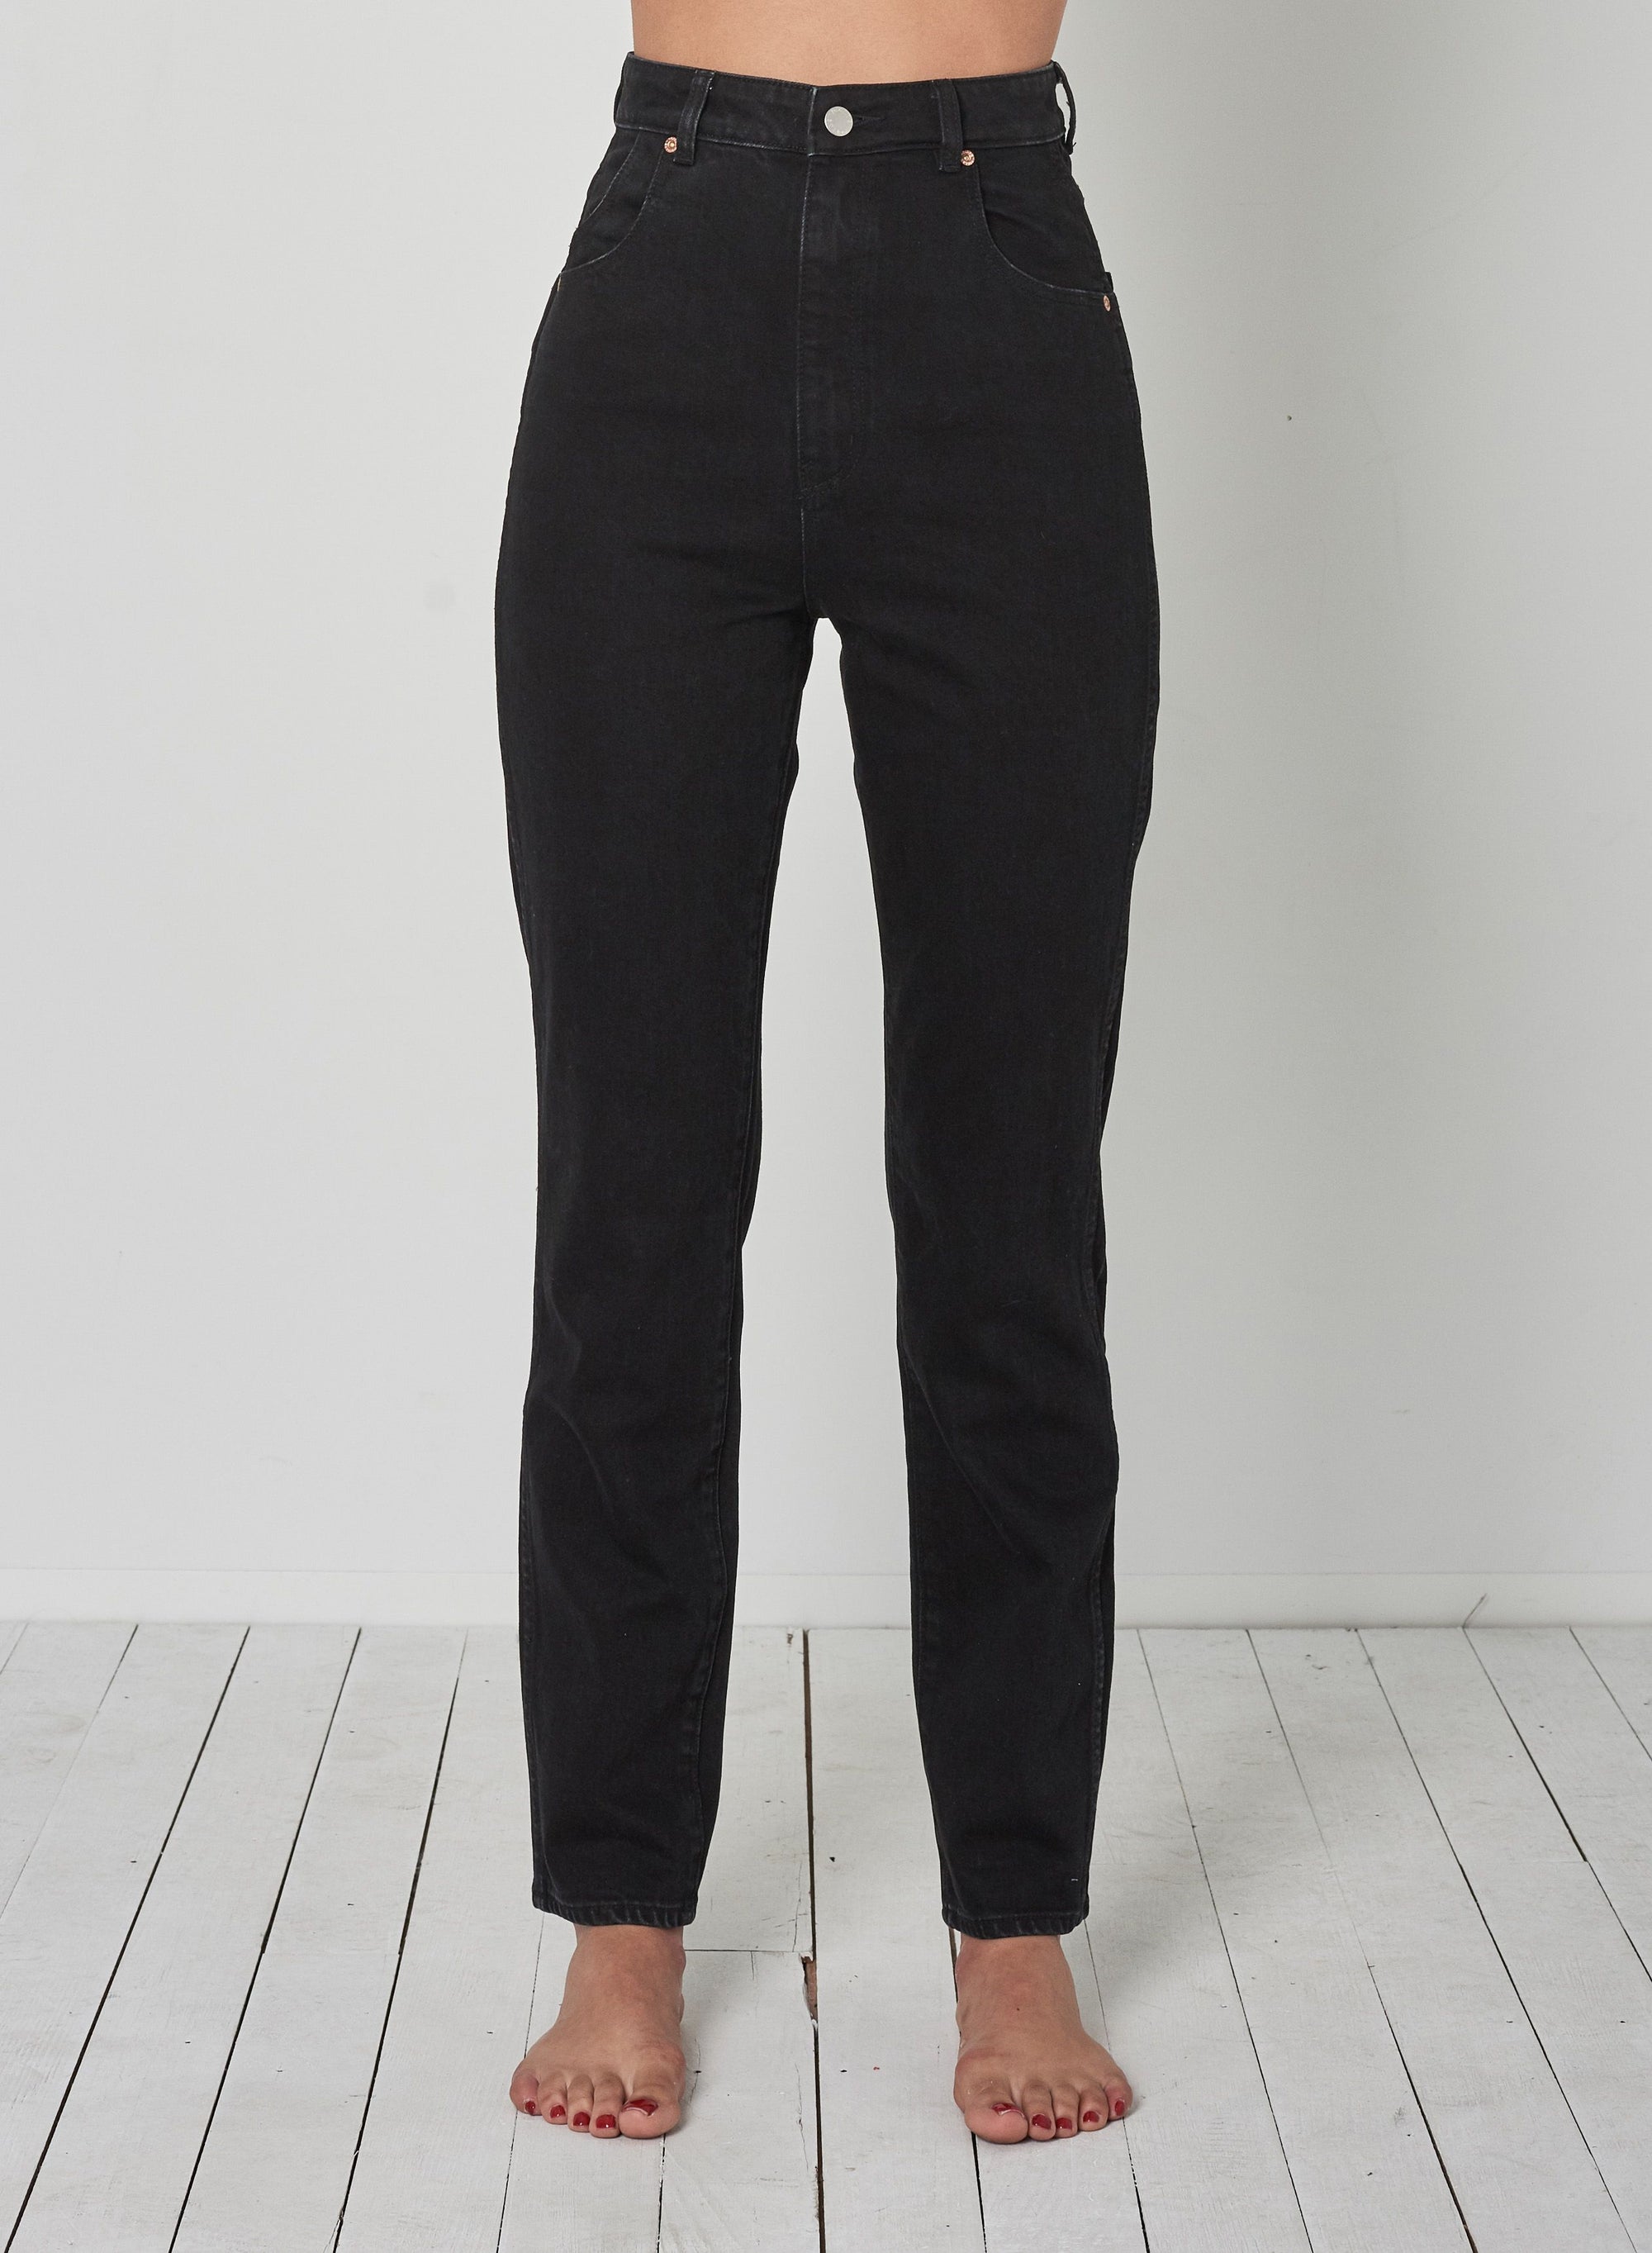 Elle Jeans in Comfort Jet Black by Rolla&#39;s